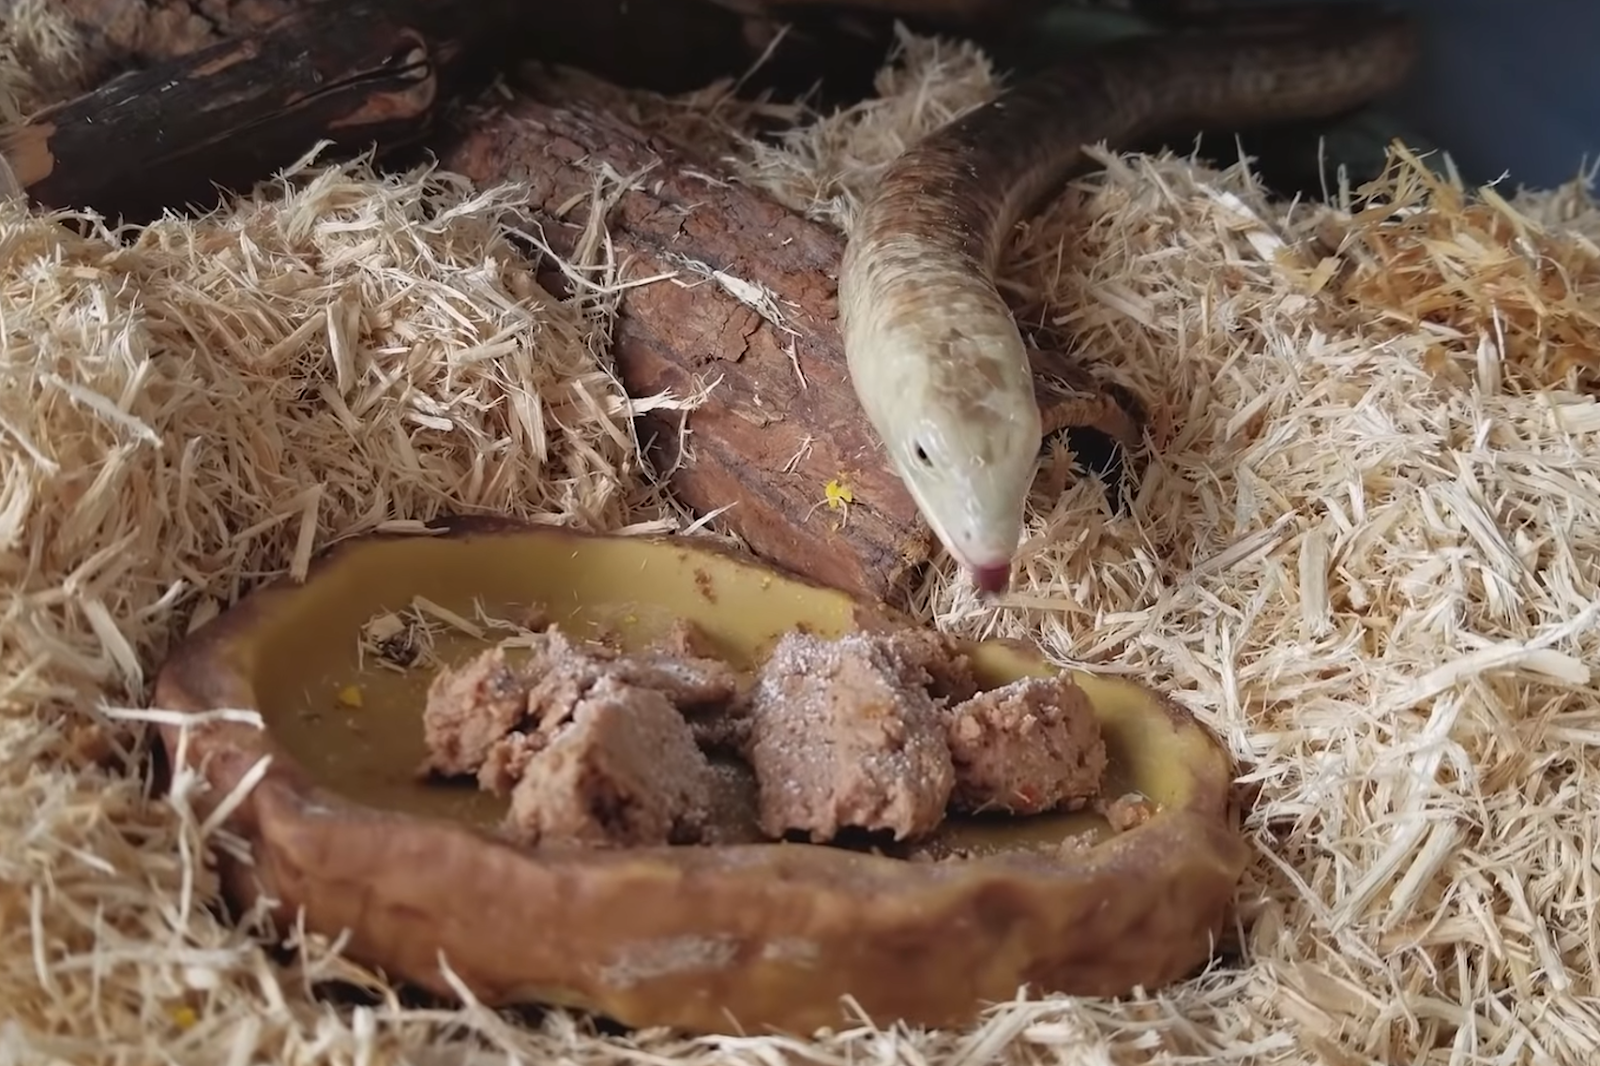 European legless lizard eating dog food